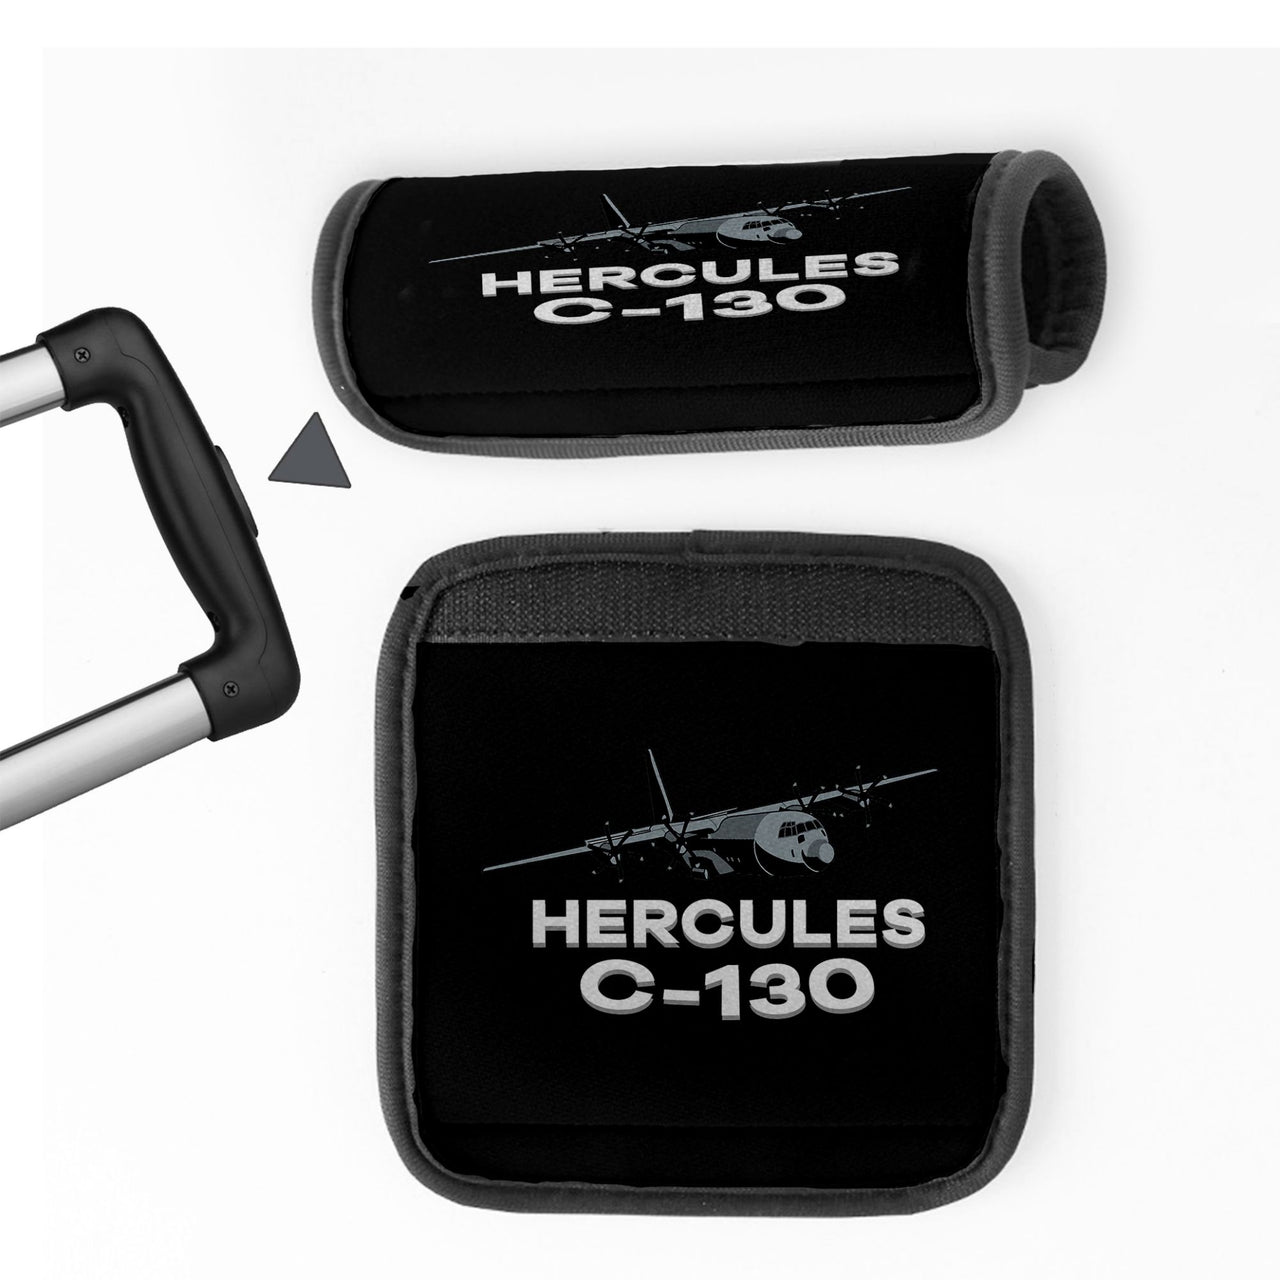 The Hercules C130 Designed Neoprene Luggage Handle Covers